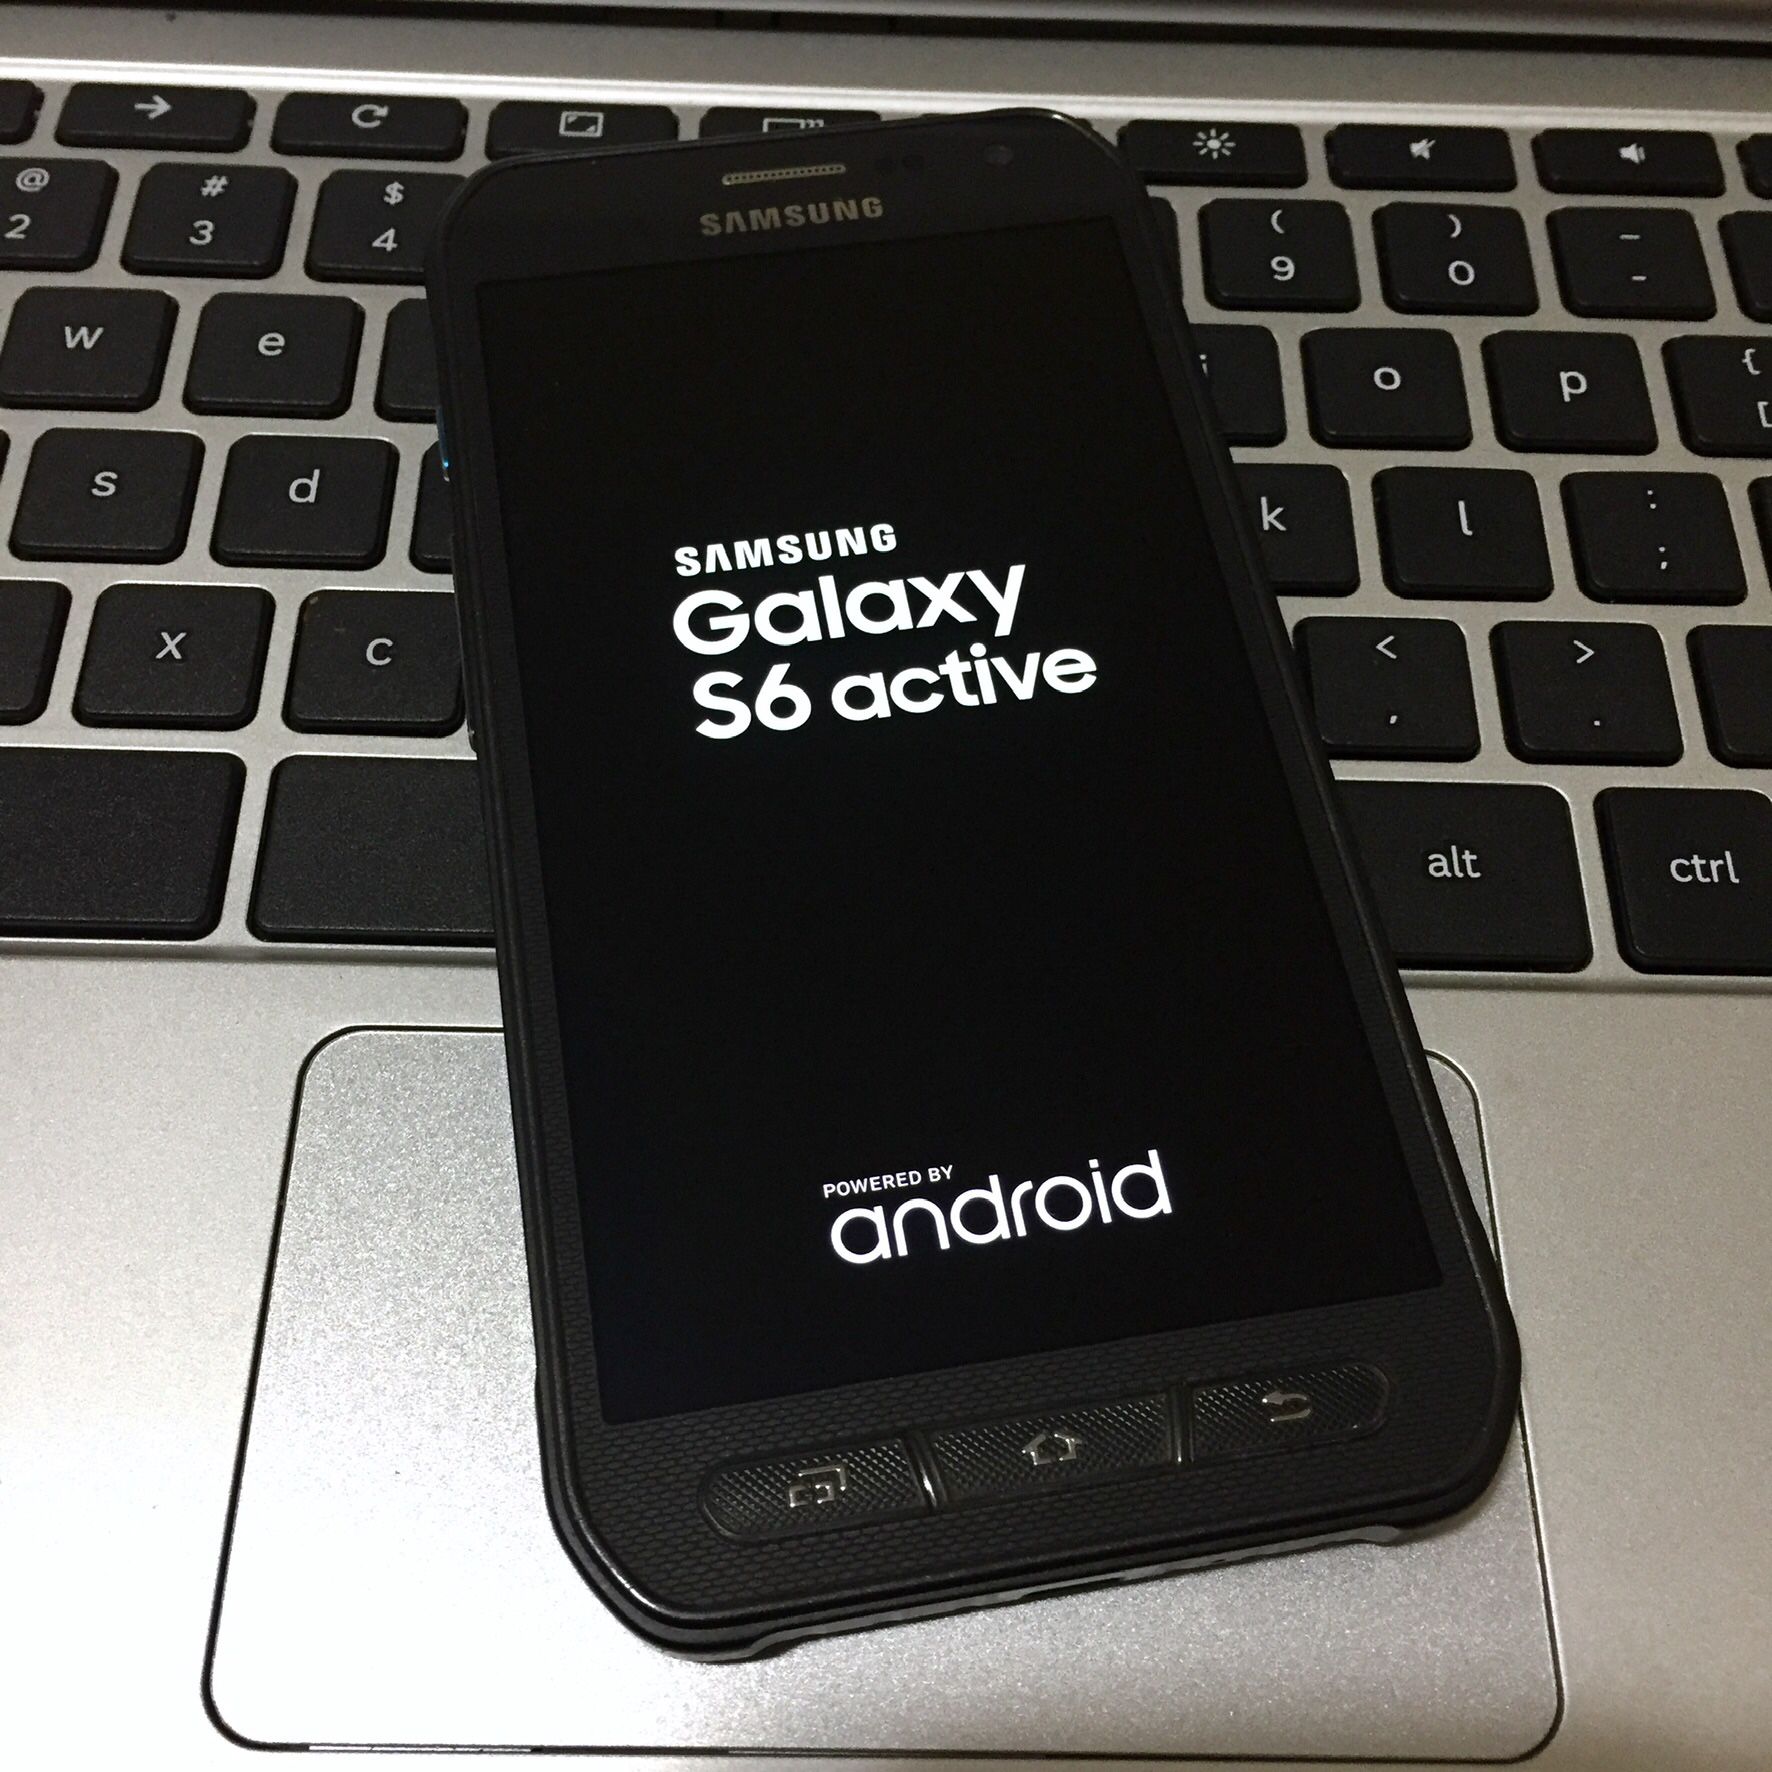 Samsung Galaxy s6 active 32gb (at&t-liberado) exelente condicion